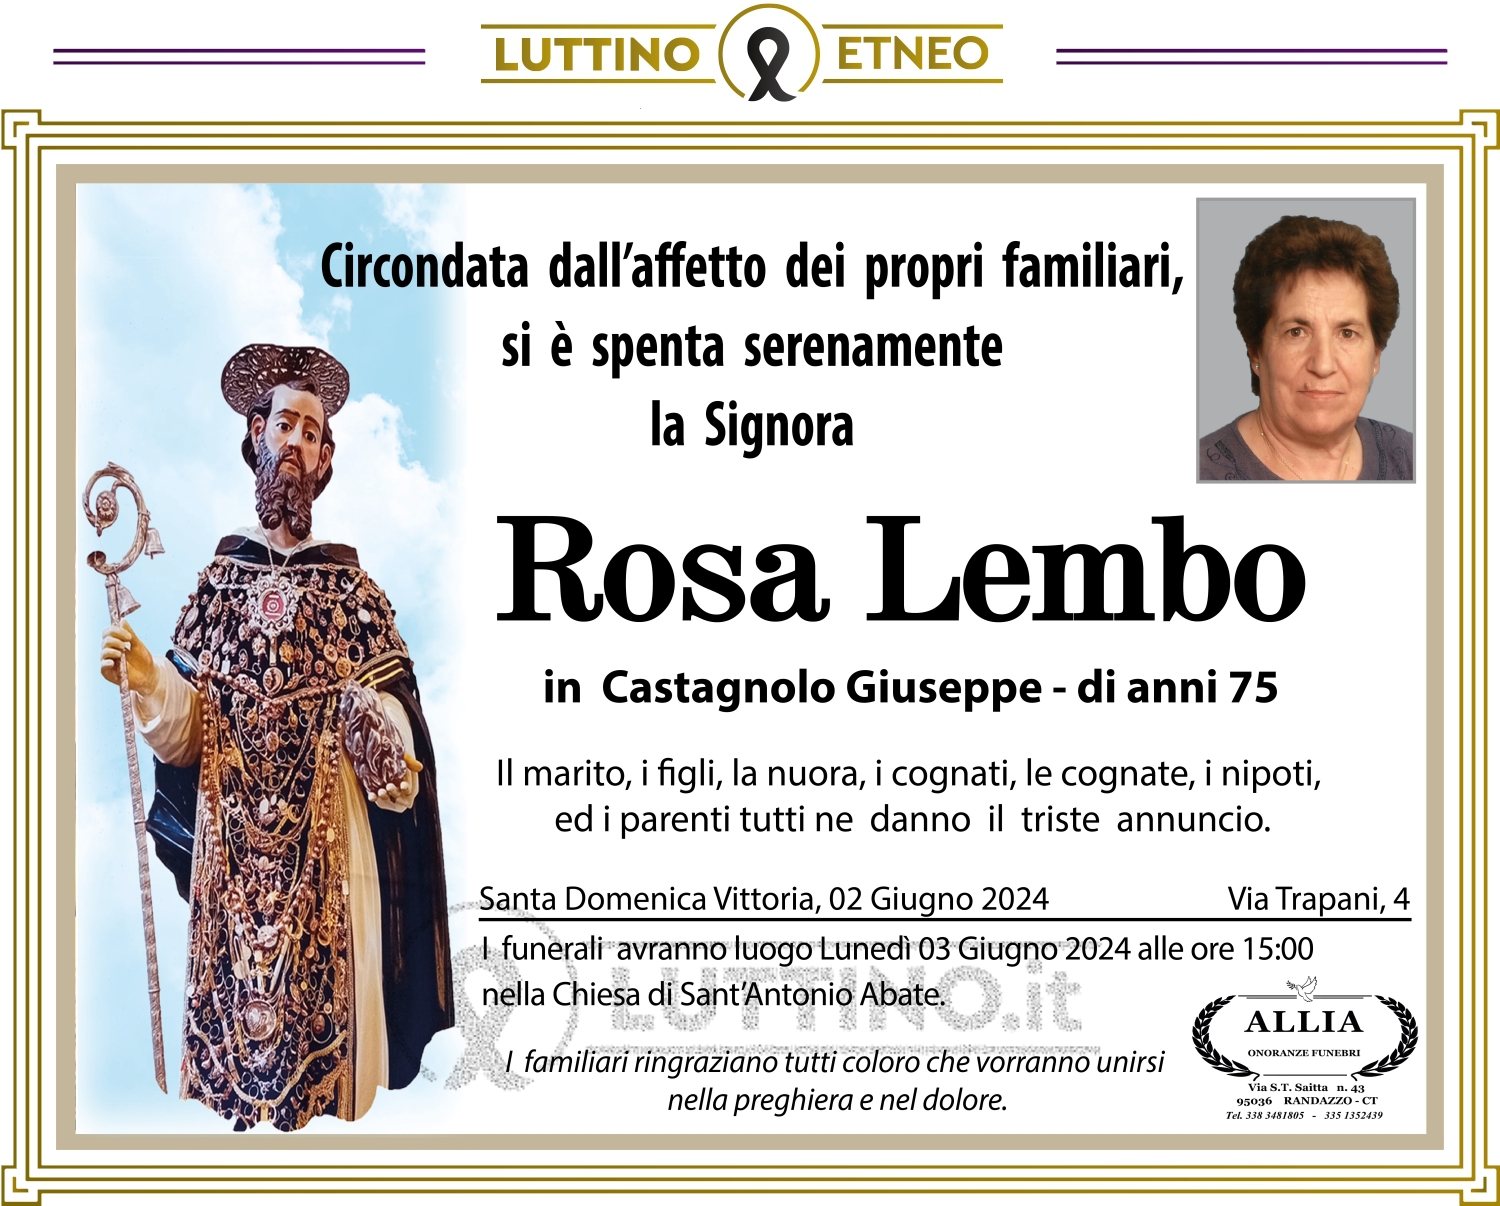 Rosa Lembo